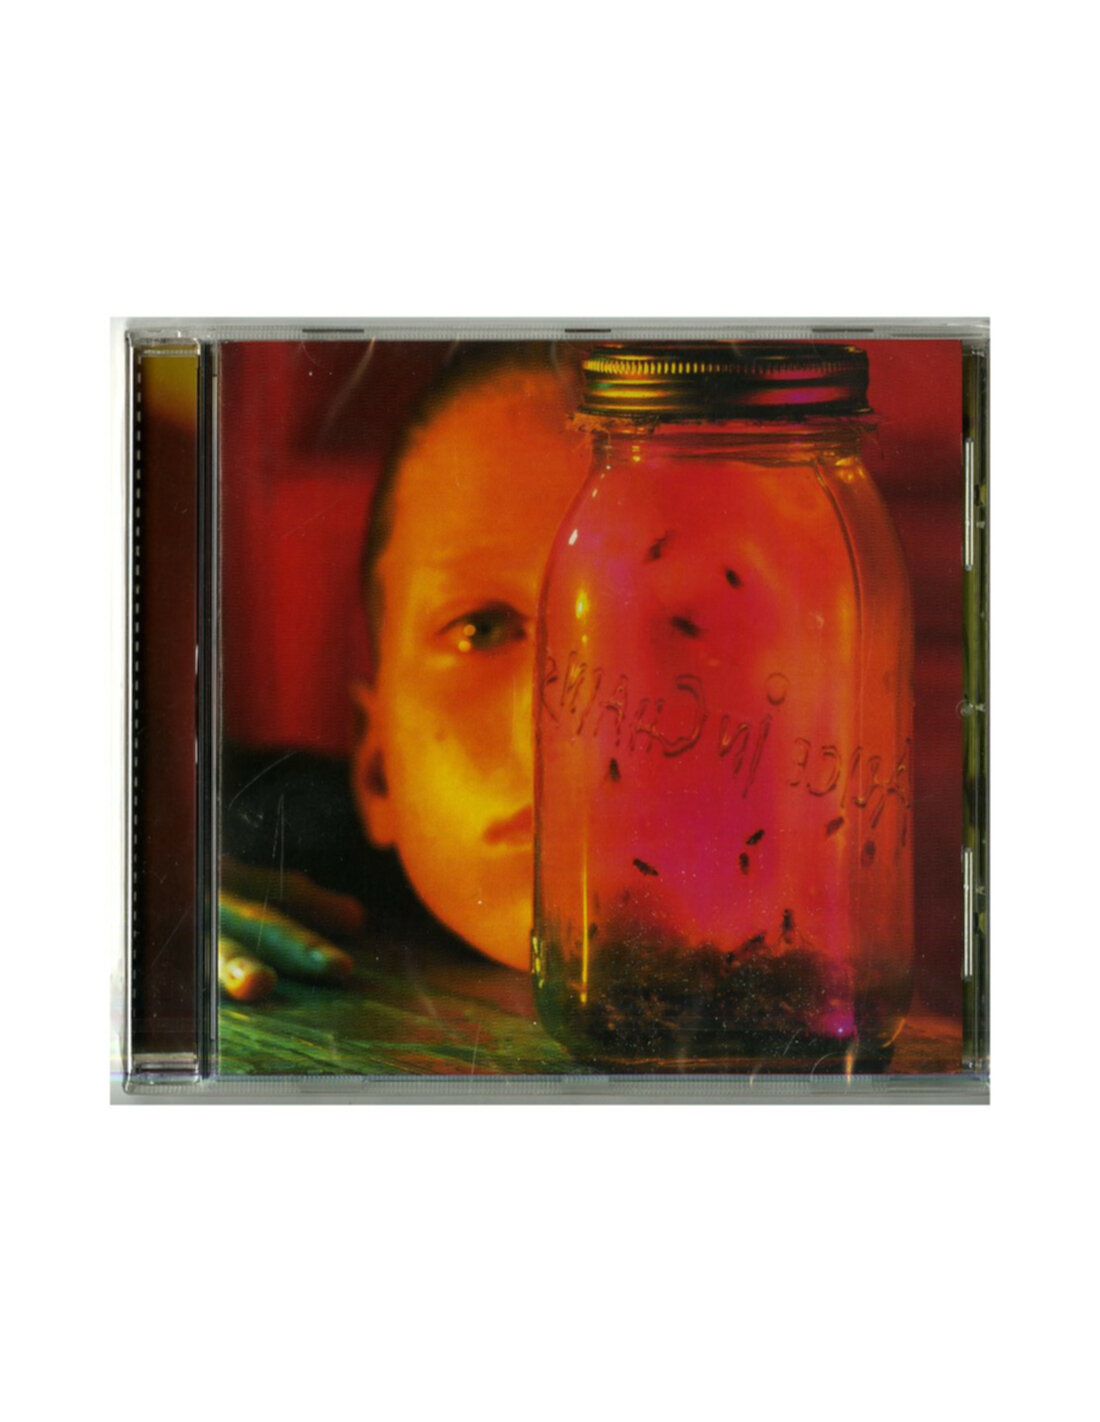 Alice In Chains - Jar Of Flies - (CD)